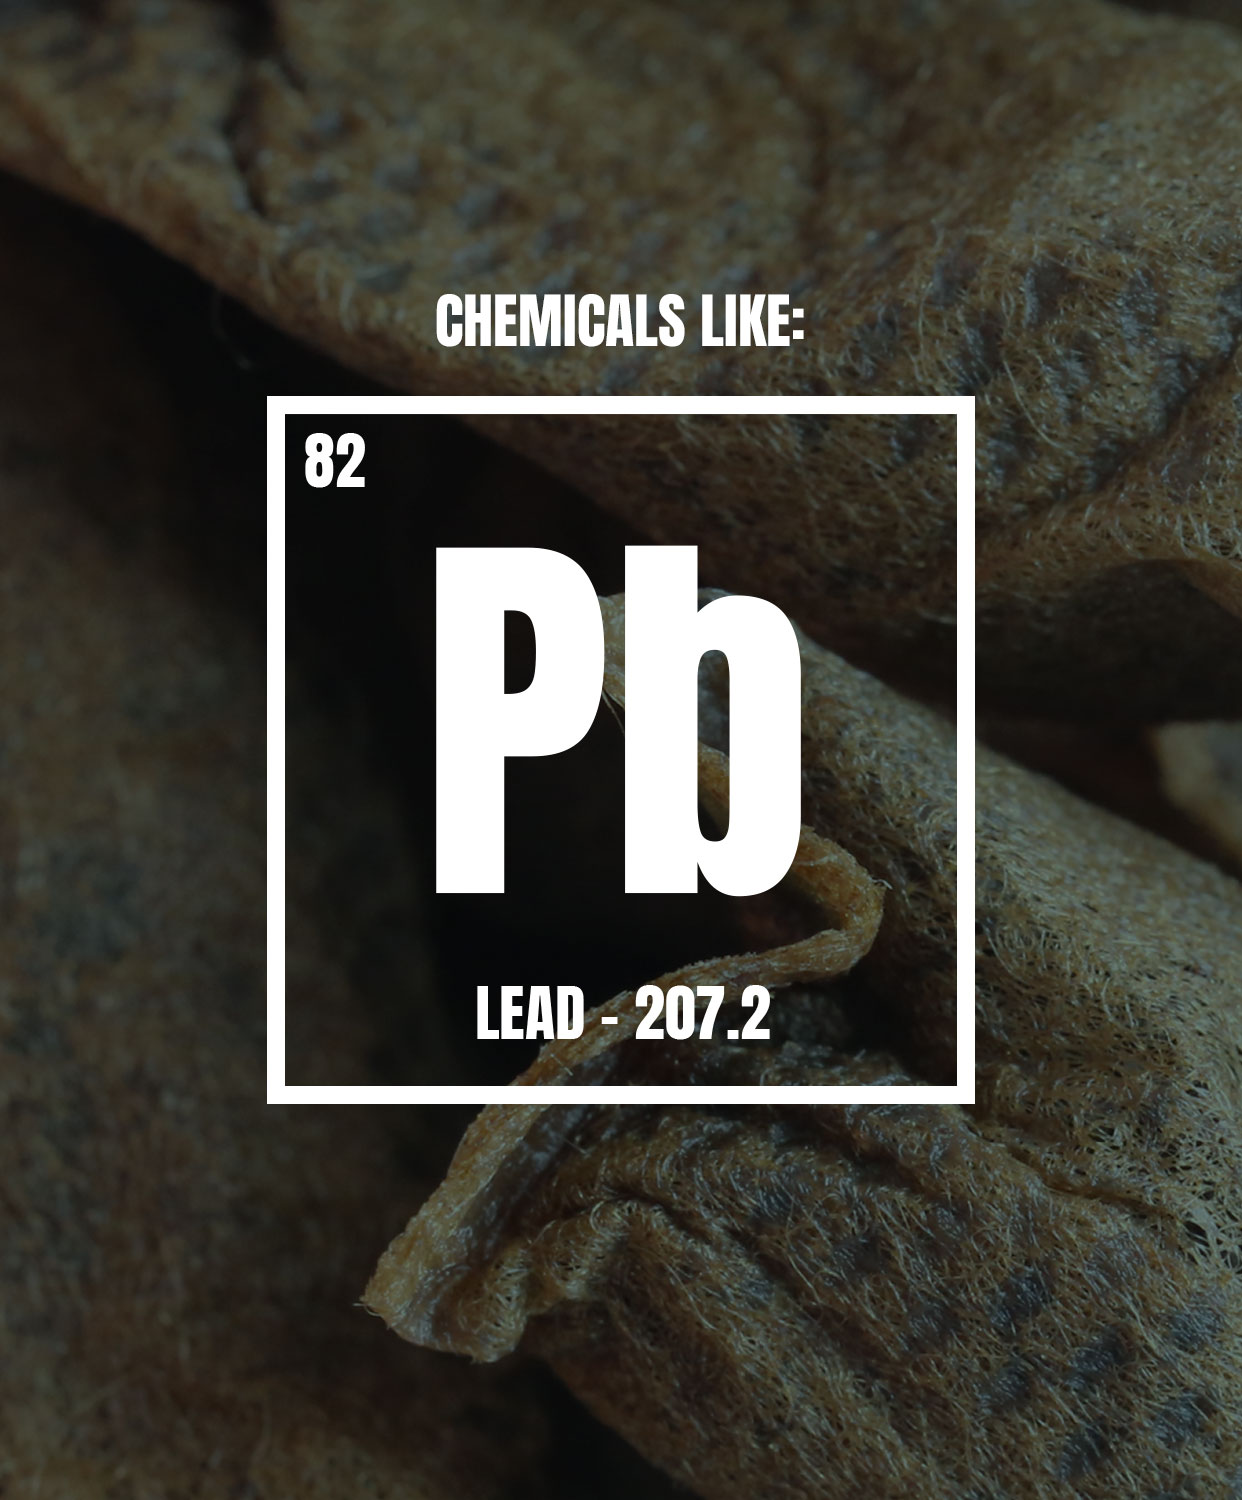 Chemicals like lead